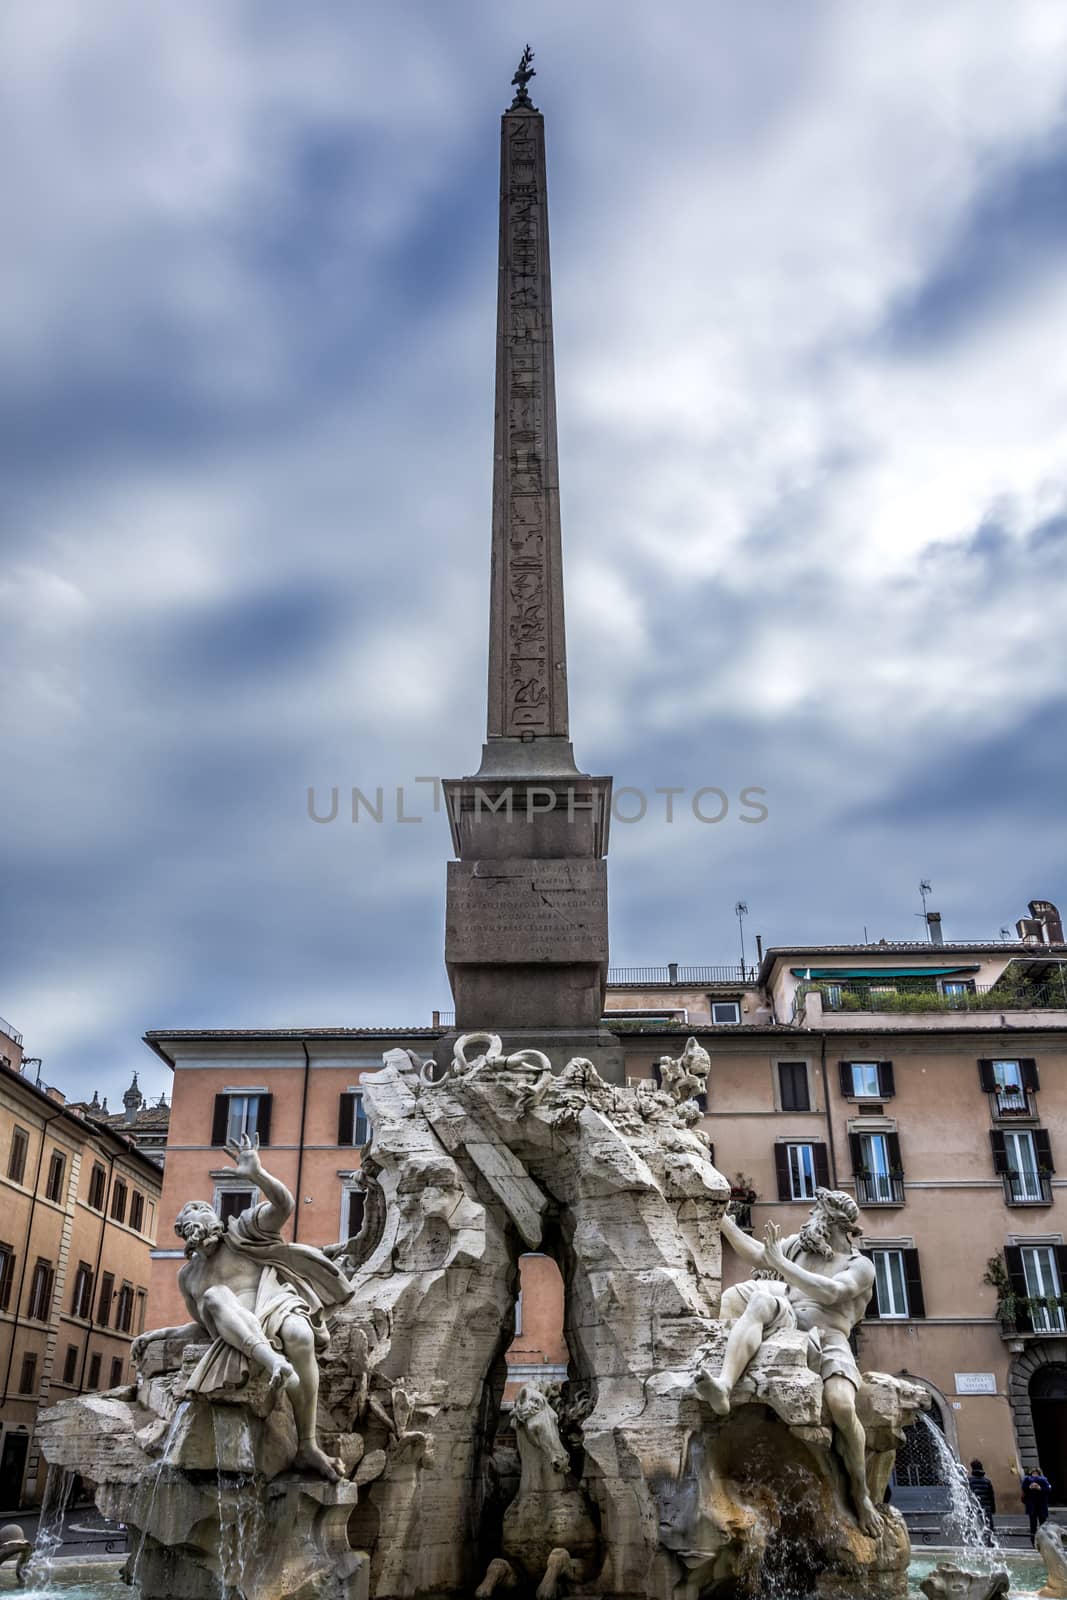 Fountain of the Four Rivers in Rome by rarrarorro